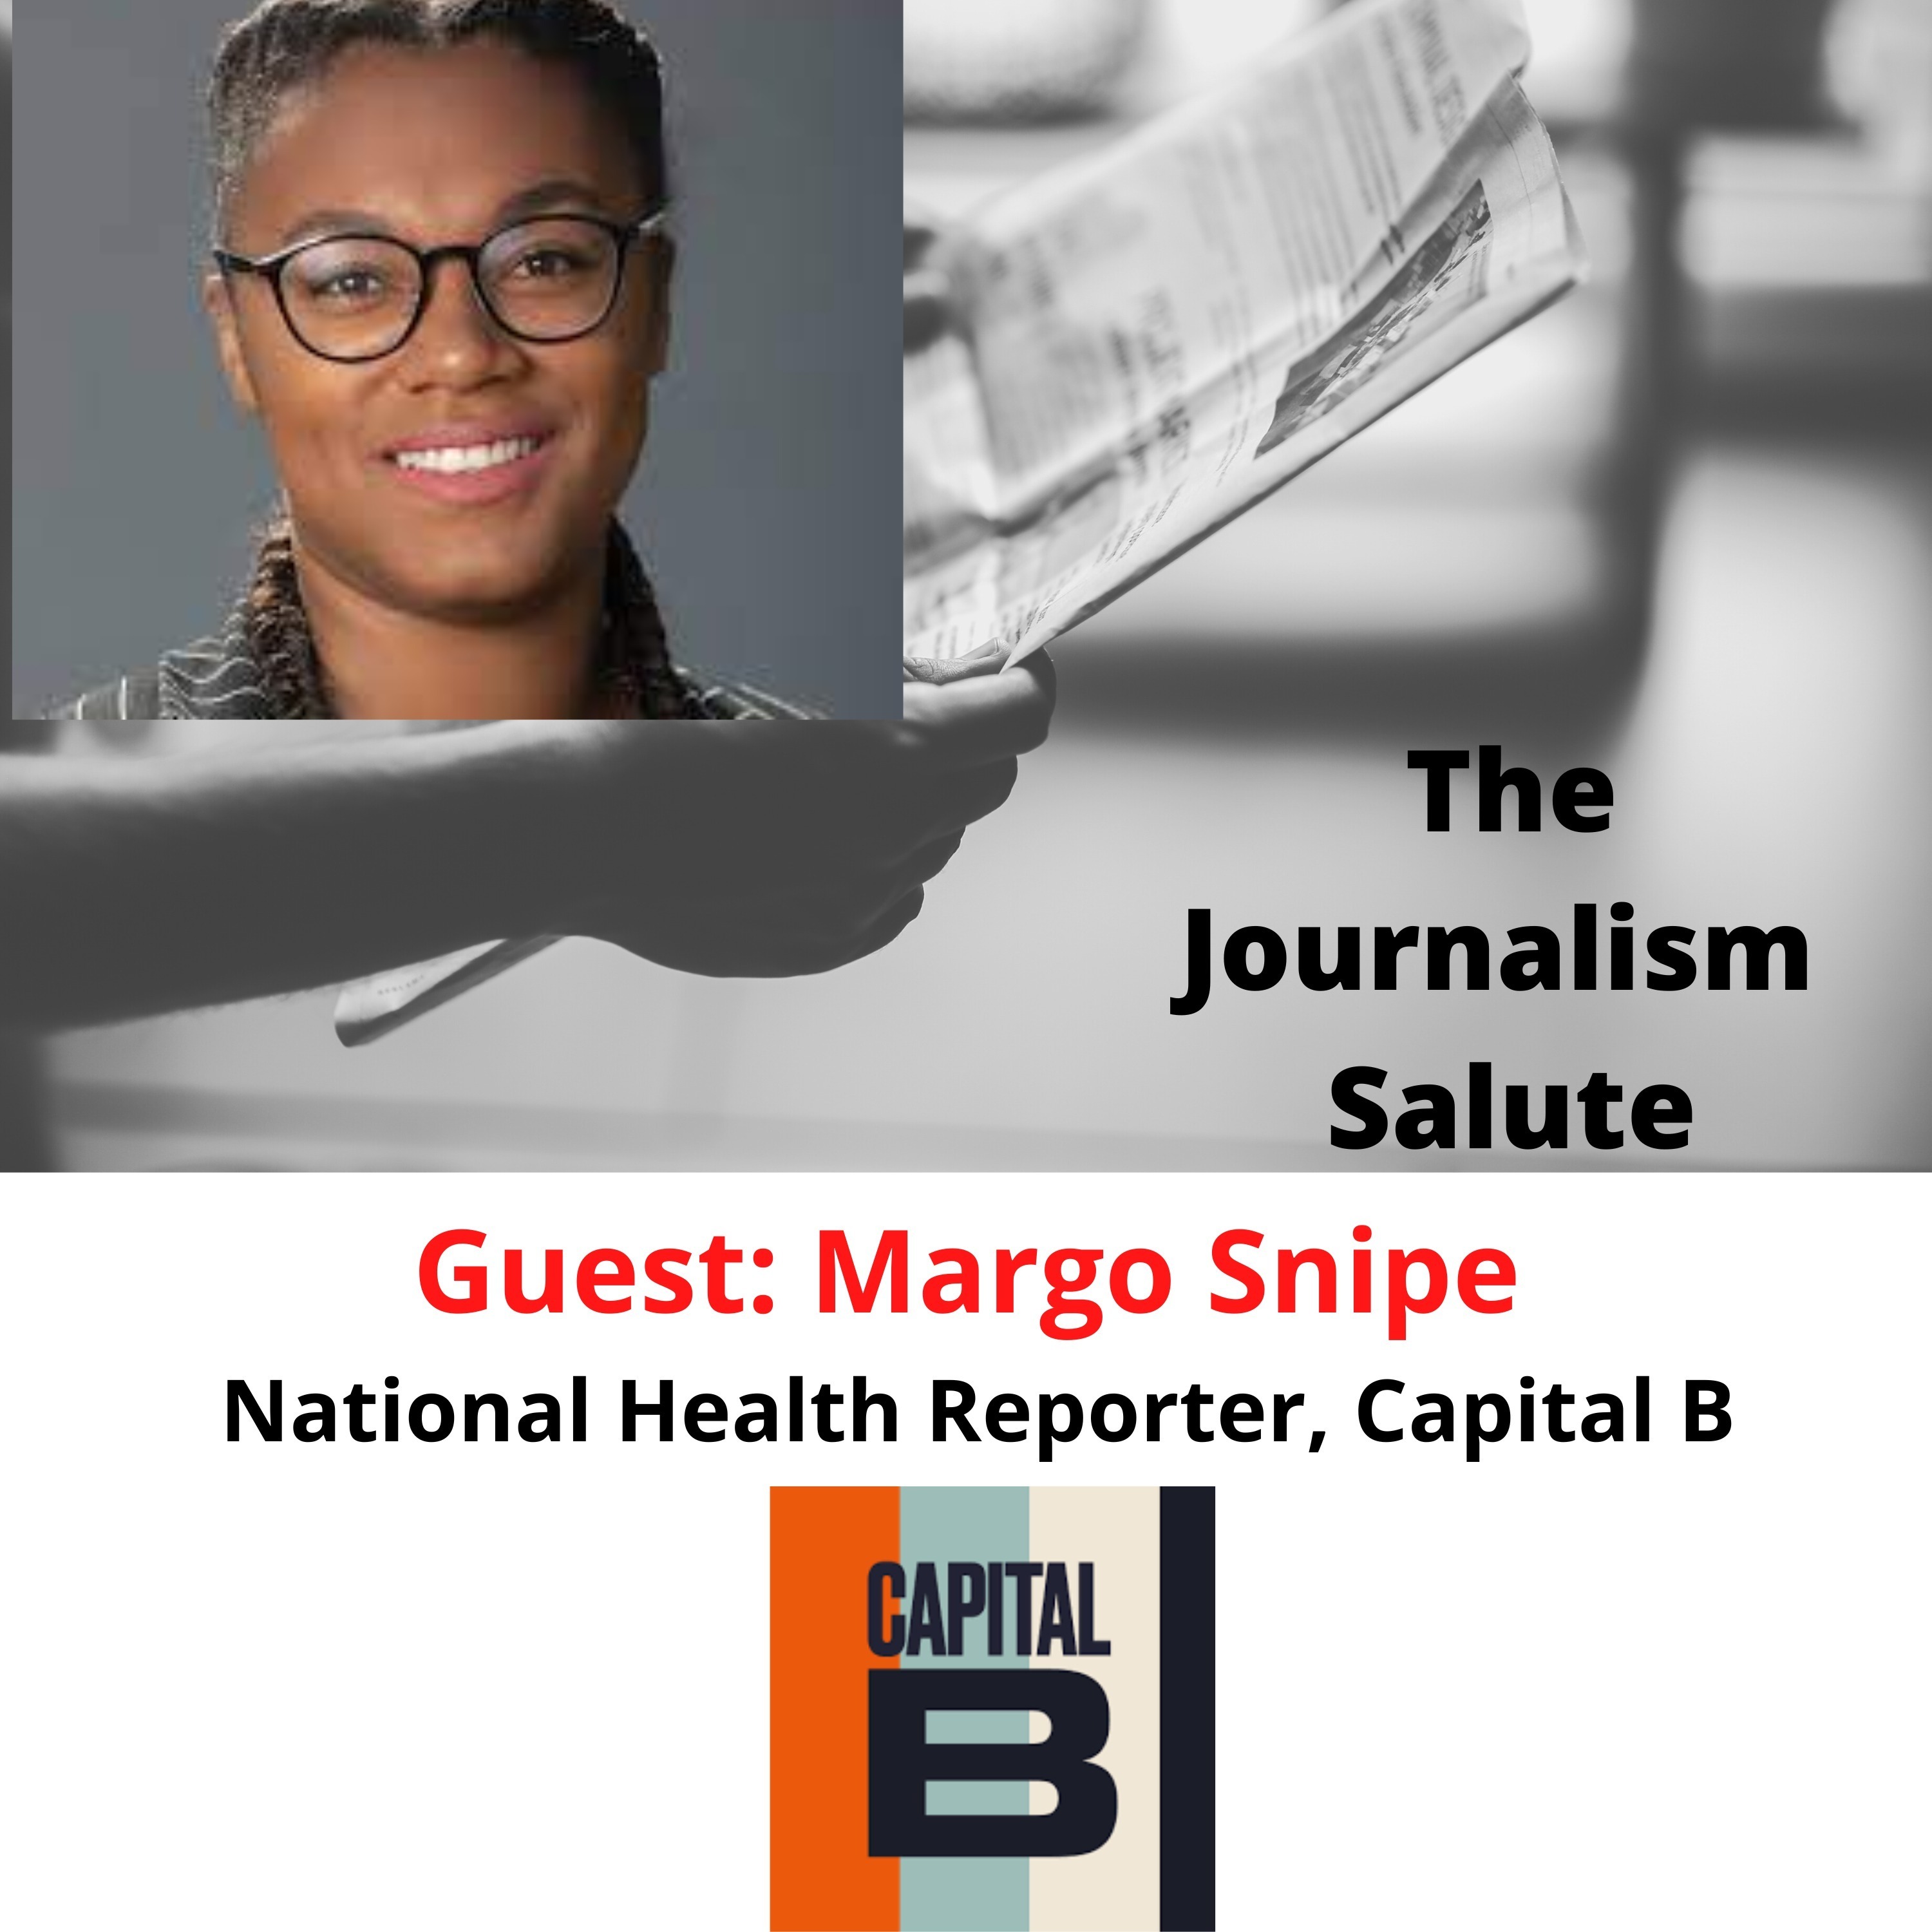 Margo Snipe, National Health Reporter, Capital B